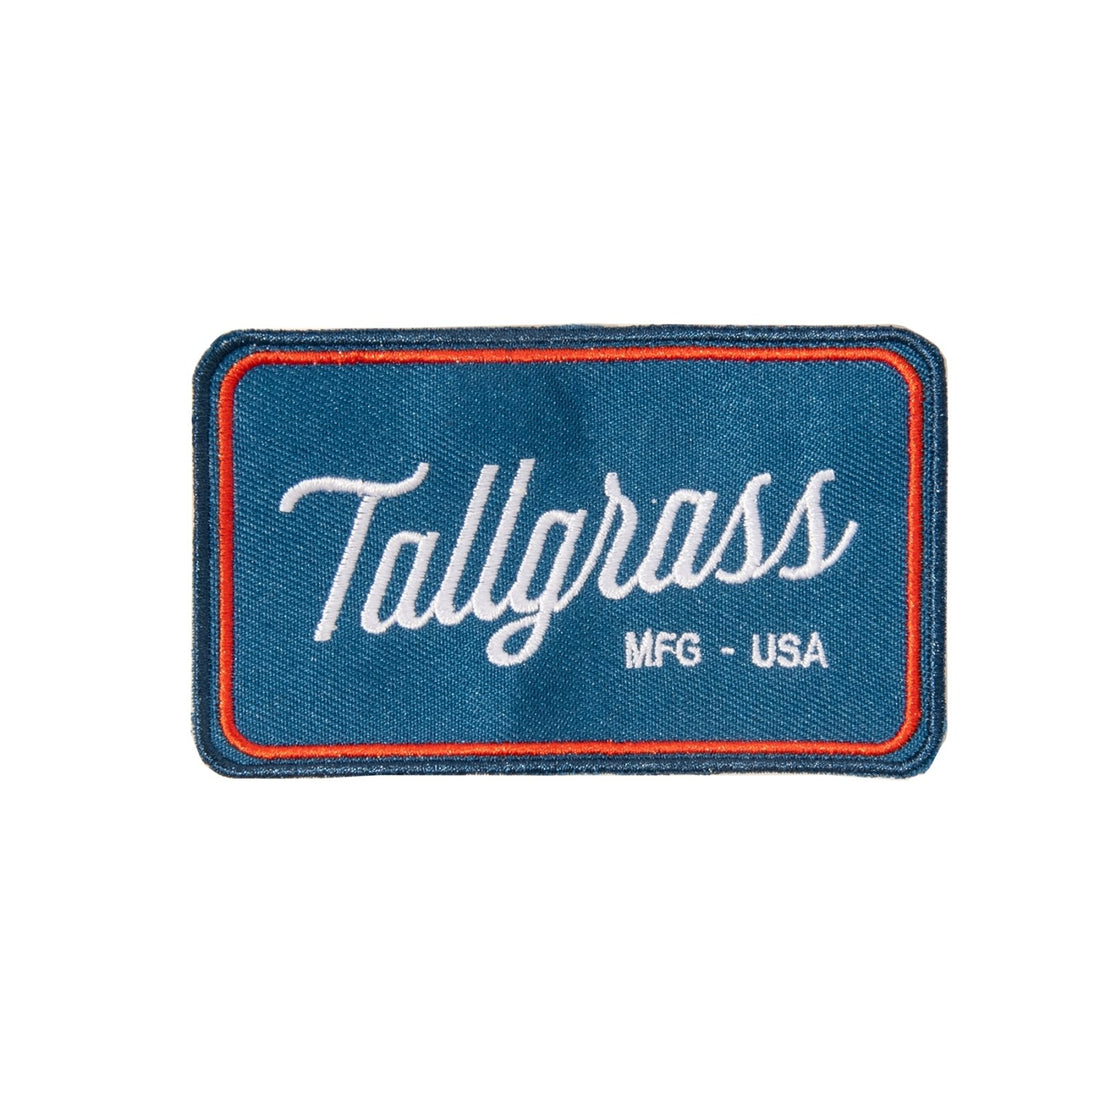 Tallgrass Supply_ Tallgrass MFG Patch.